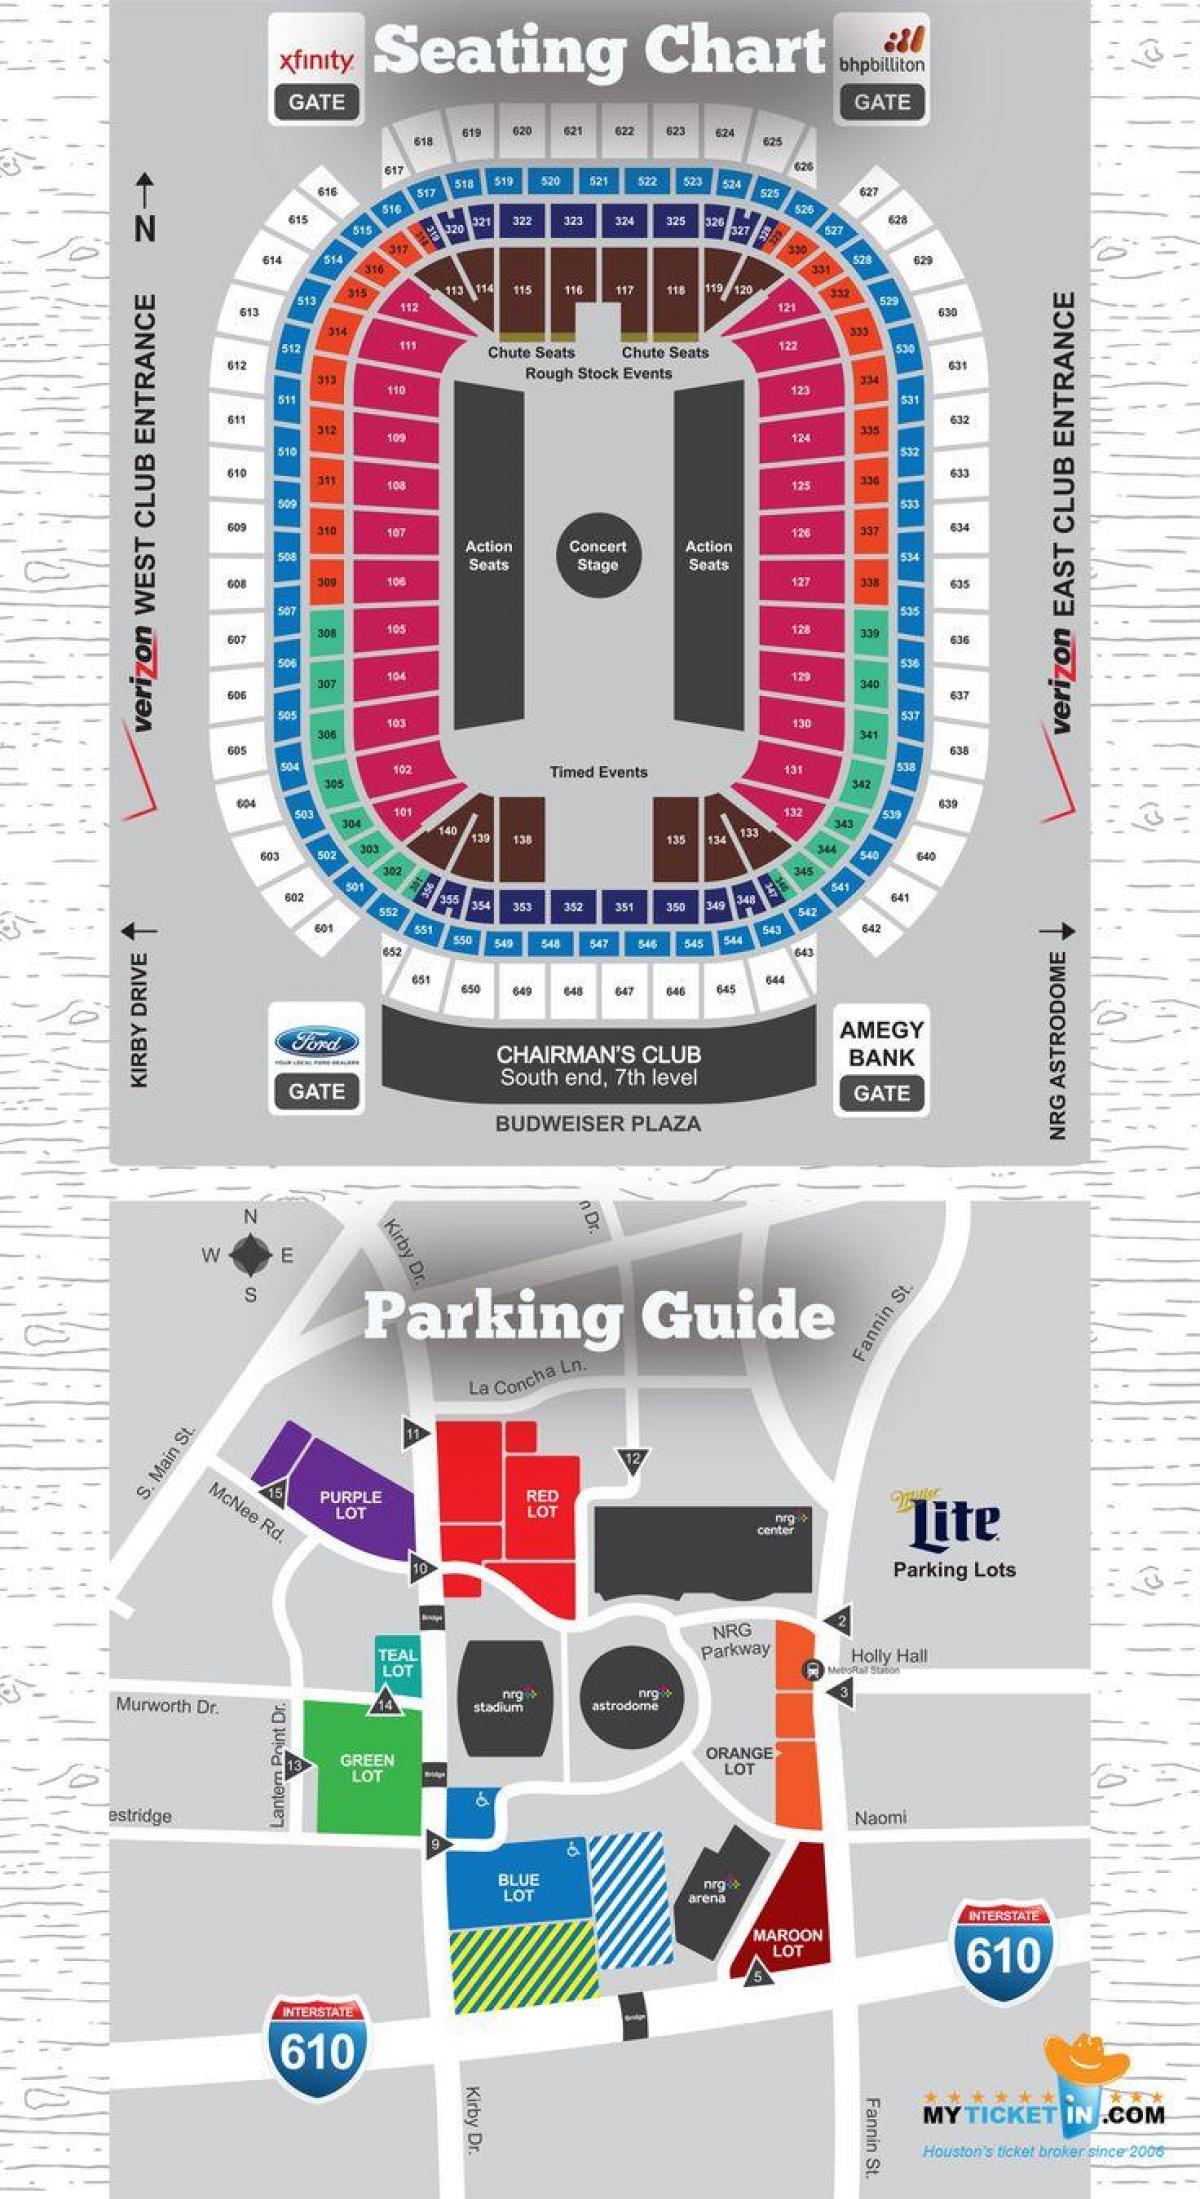 NRG park map Reliant stadium parking map (Texas USA)